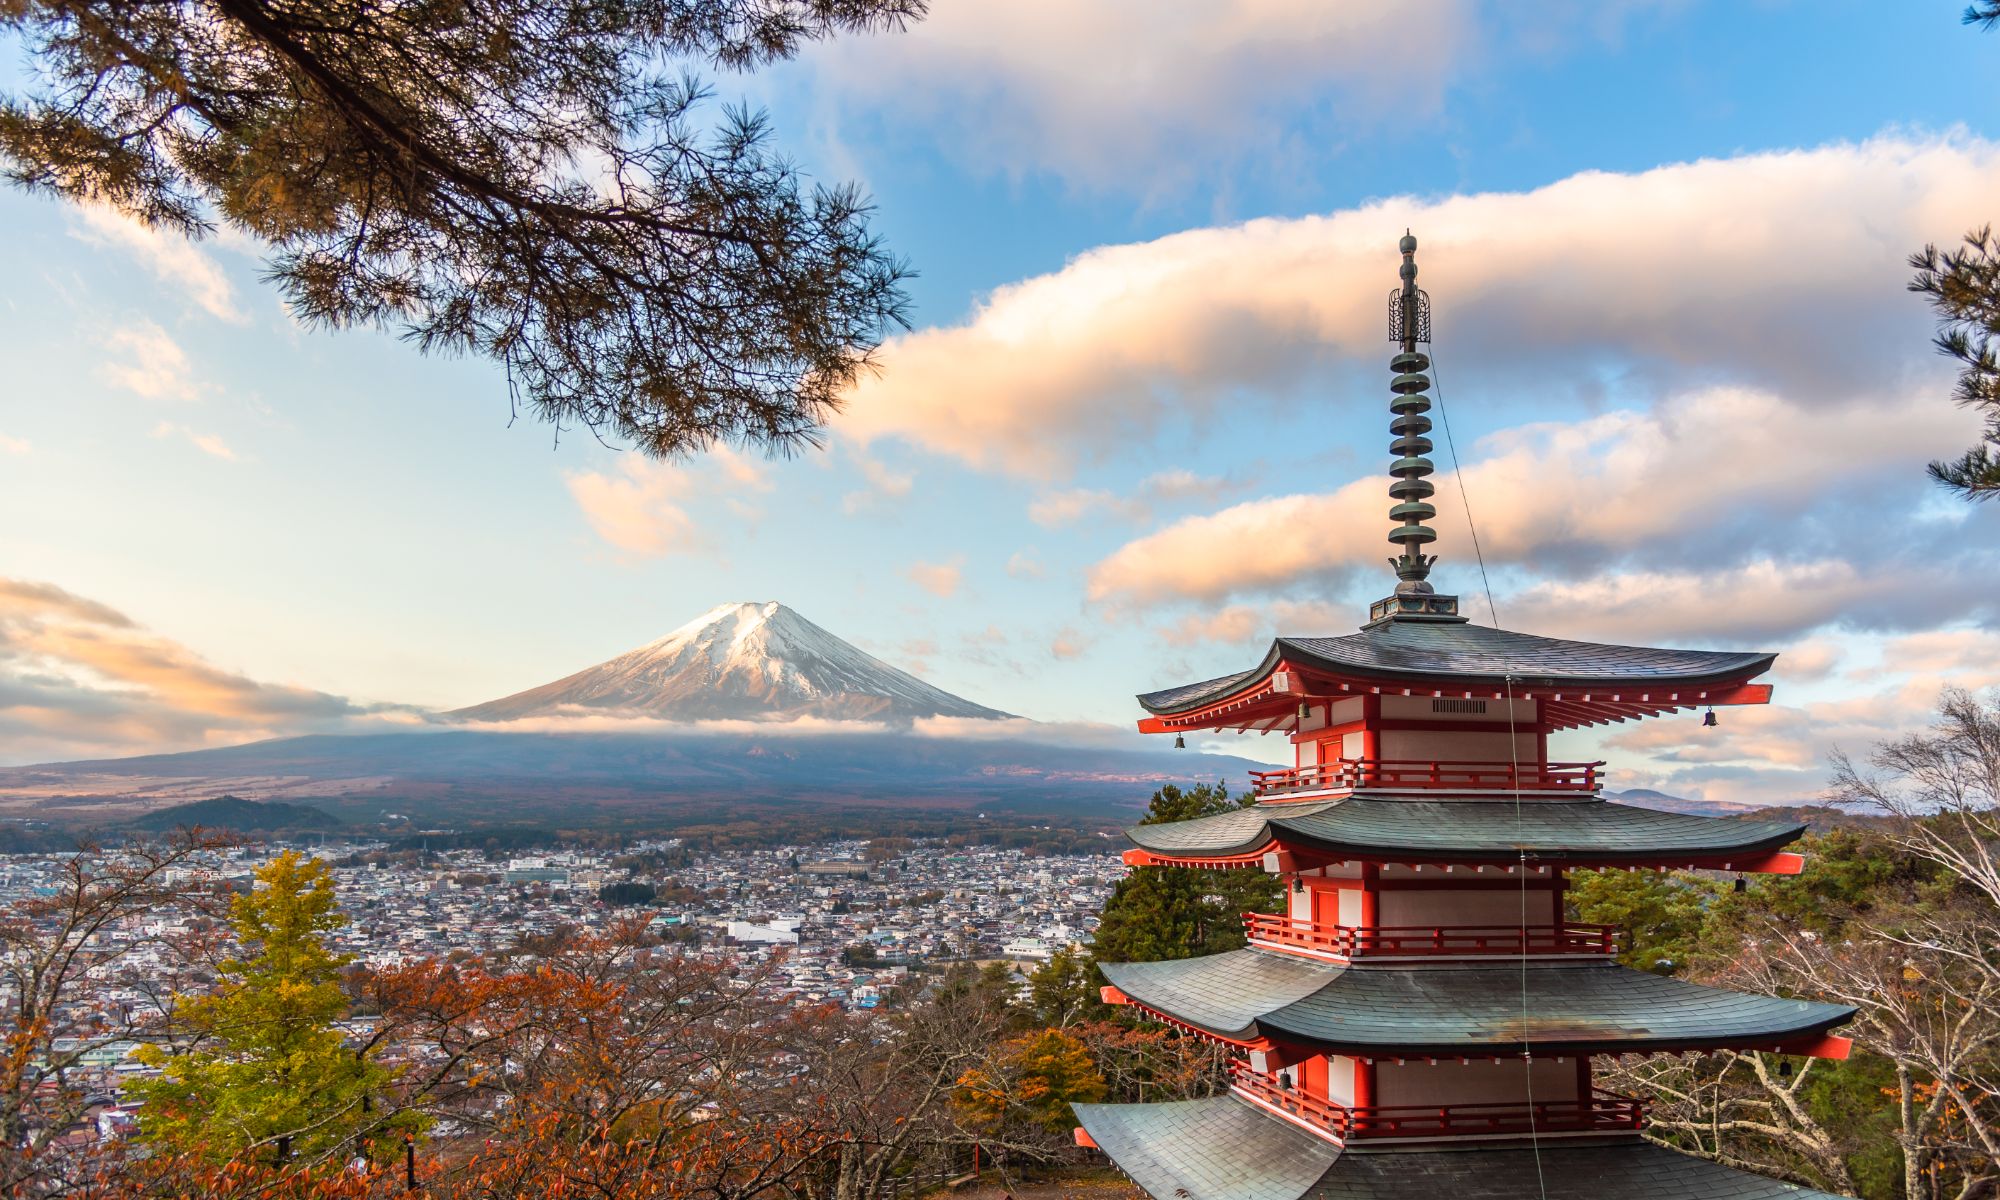 Japan Arakurayama Sengen Park Mount Fuji Chureito Pagoda